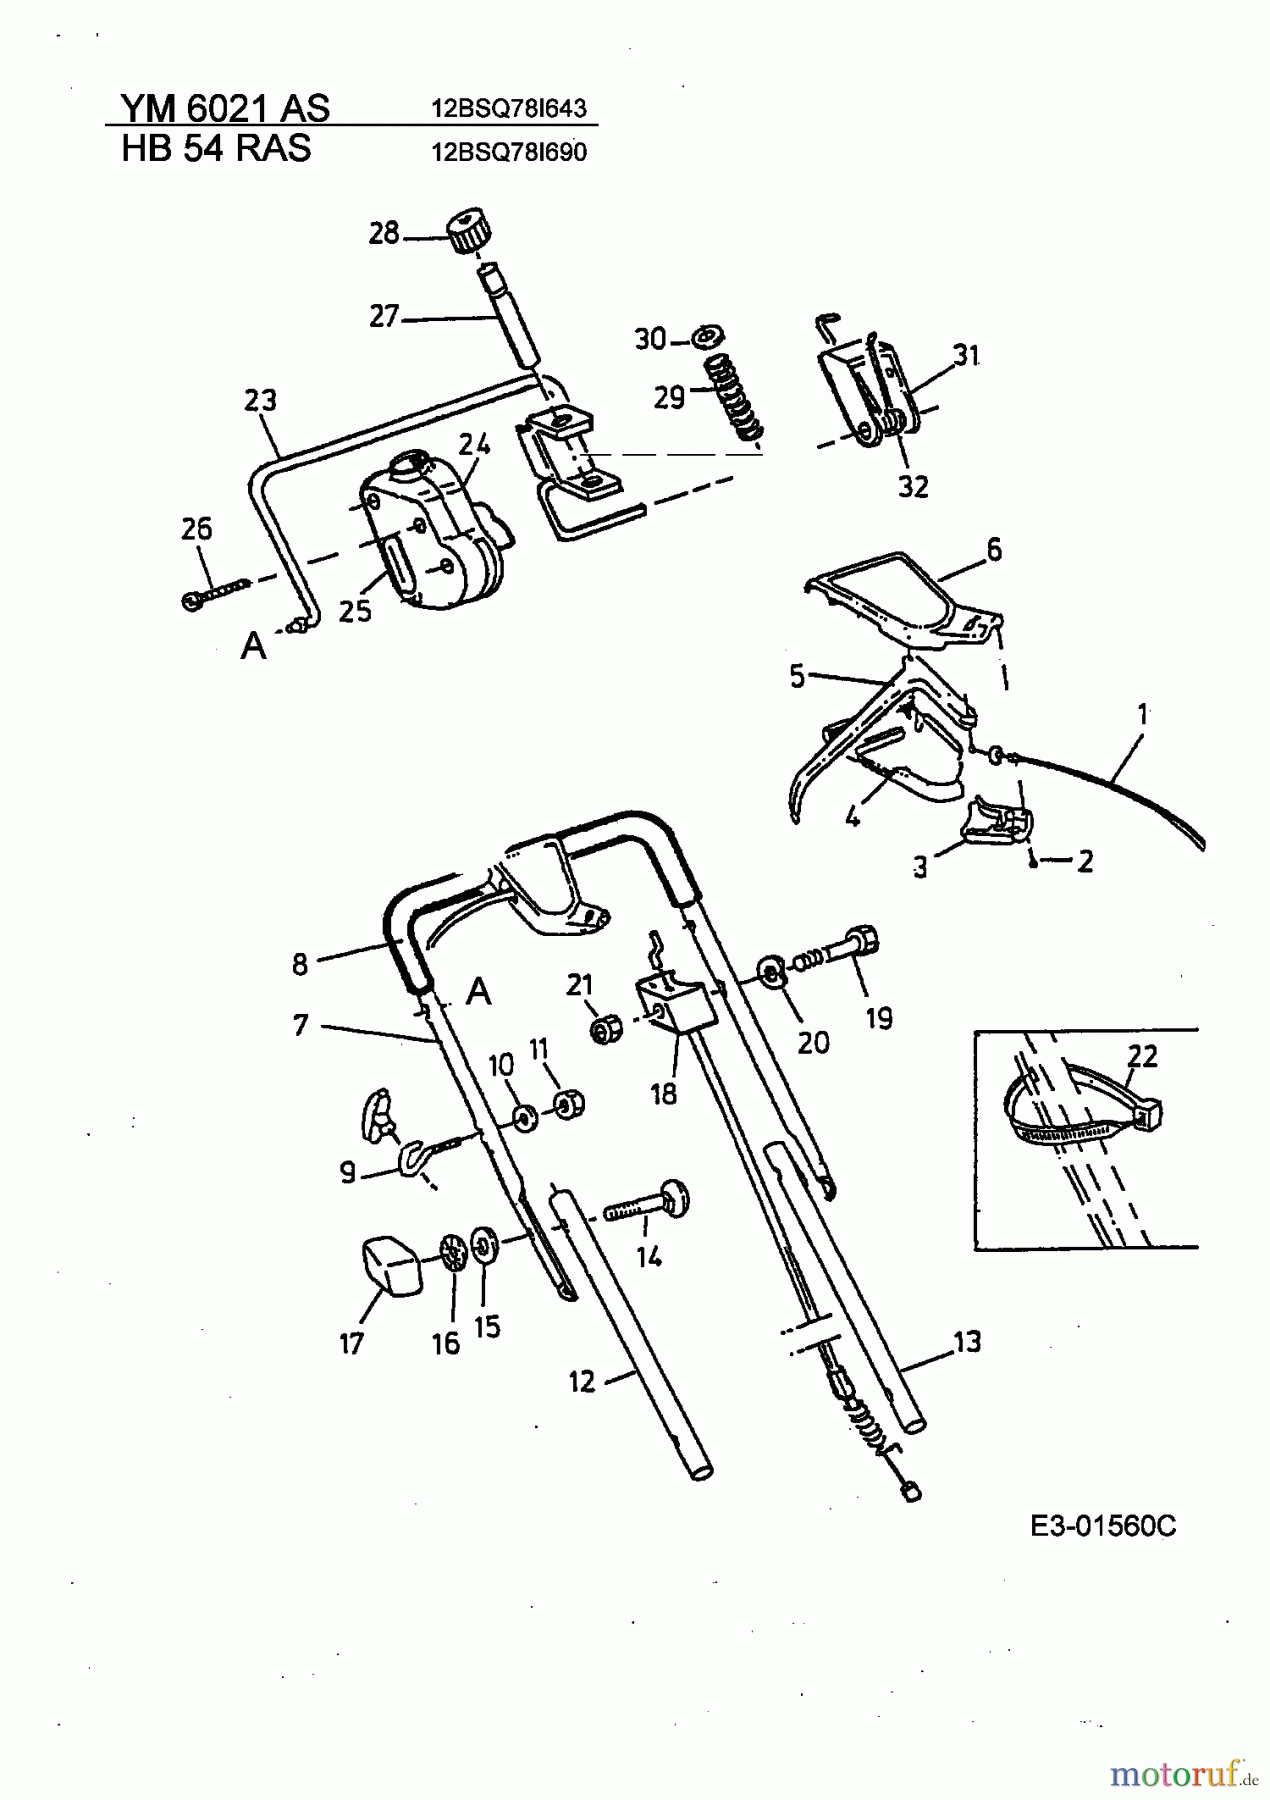  Gutbrod Petrol mower self propelled HB 54 RAS 12BSQ79U690  (2002) Upper handle